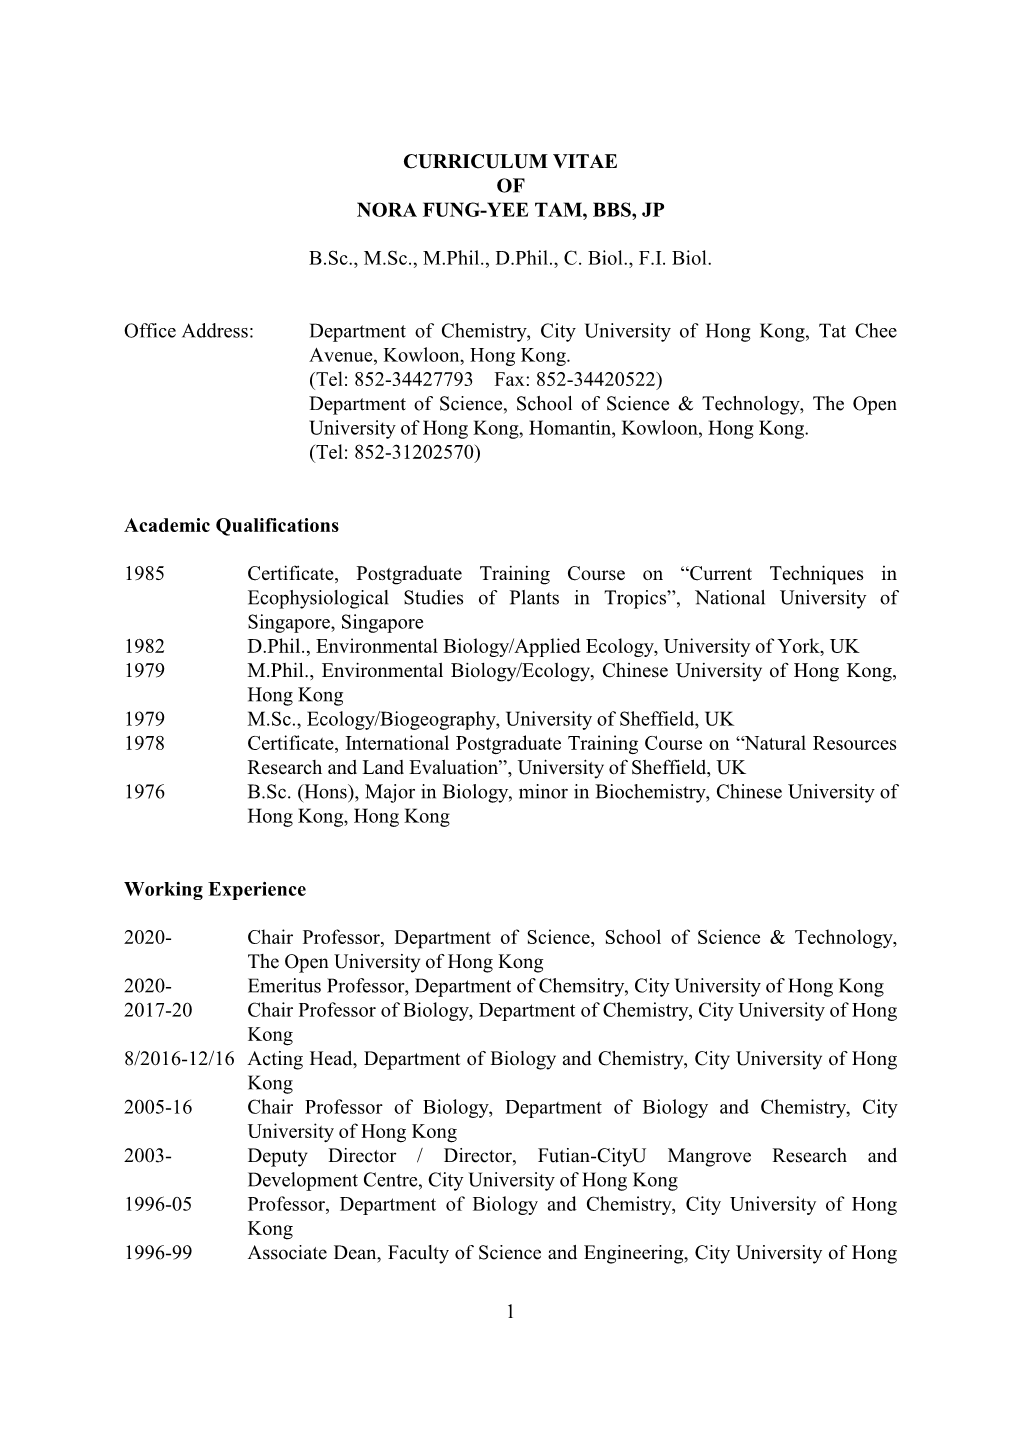 Curriculum Vitae of Nora Fung-Yee Tam, Bbs, Jp - DocsLib